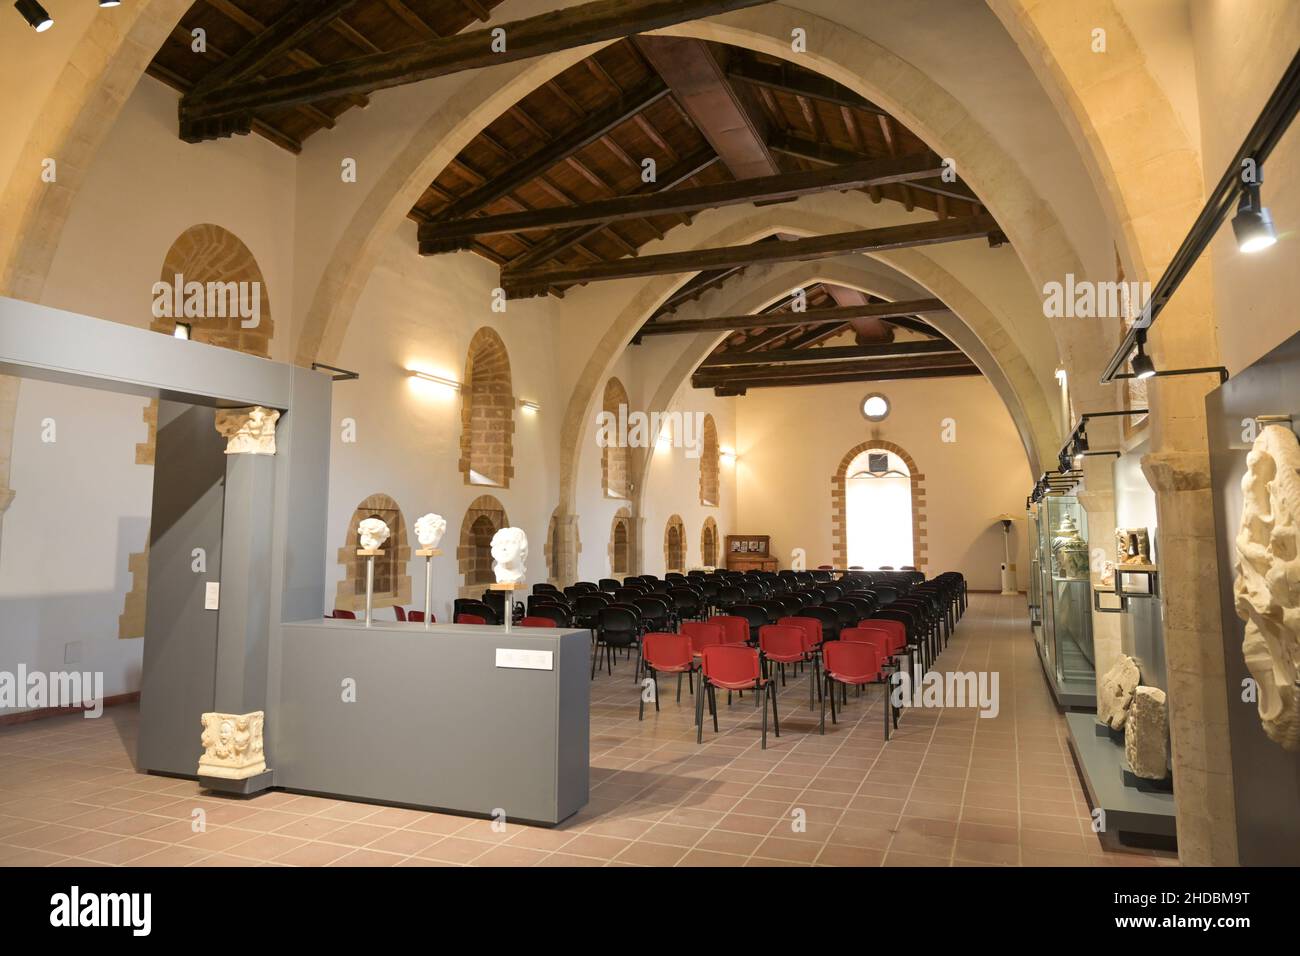 Ehemaliges Dormitorium (Schlafsaal), Festsaal, Zisterzienserkloster 'Monache cistercensi santo spirito', Agrigent, Sizilien, Italien Foto de stock